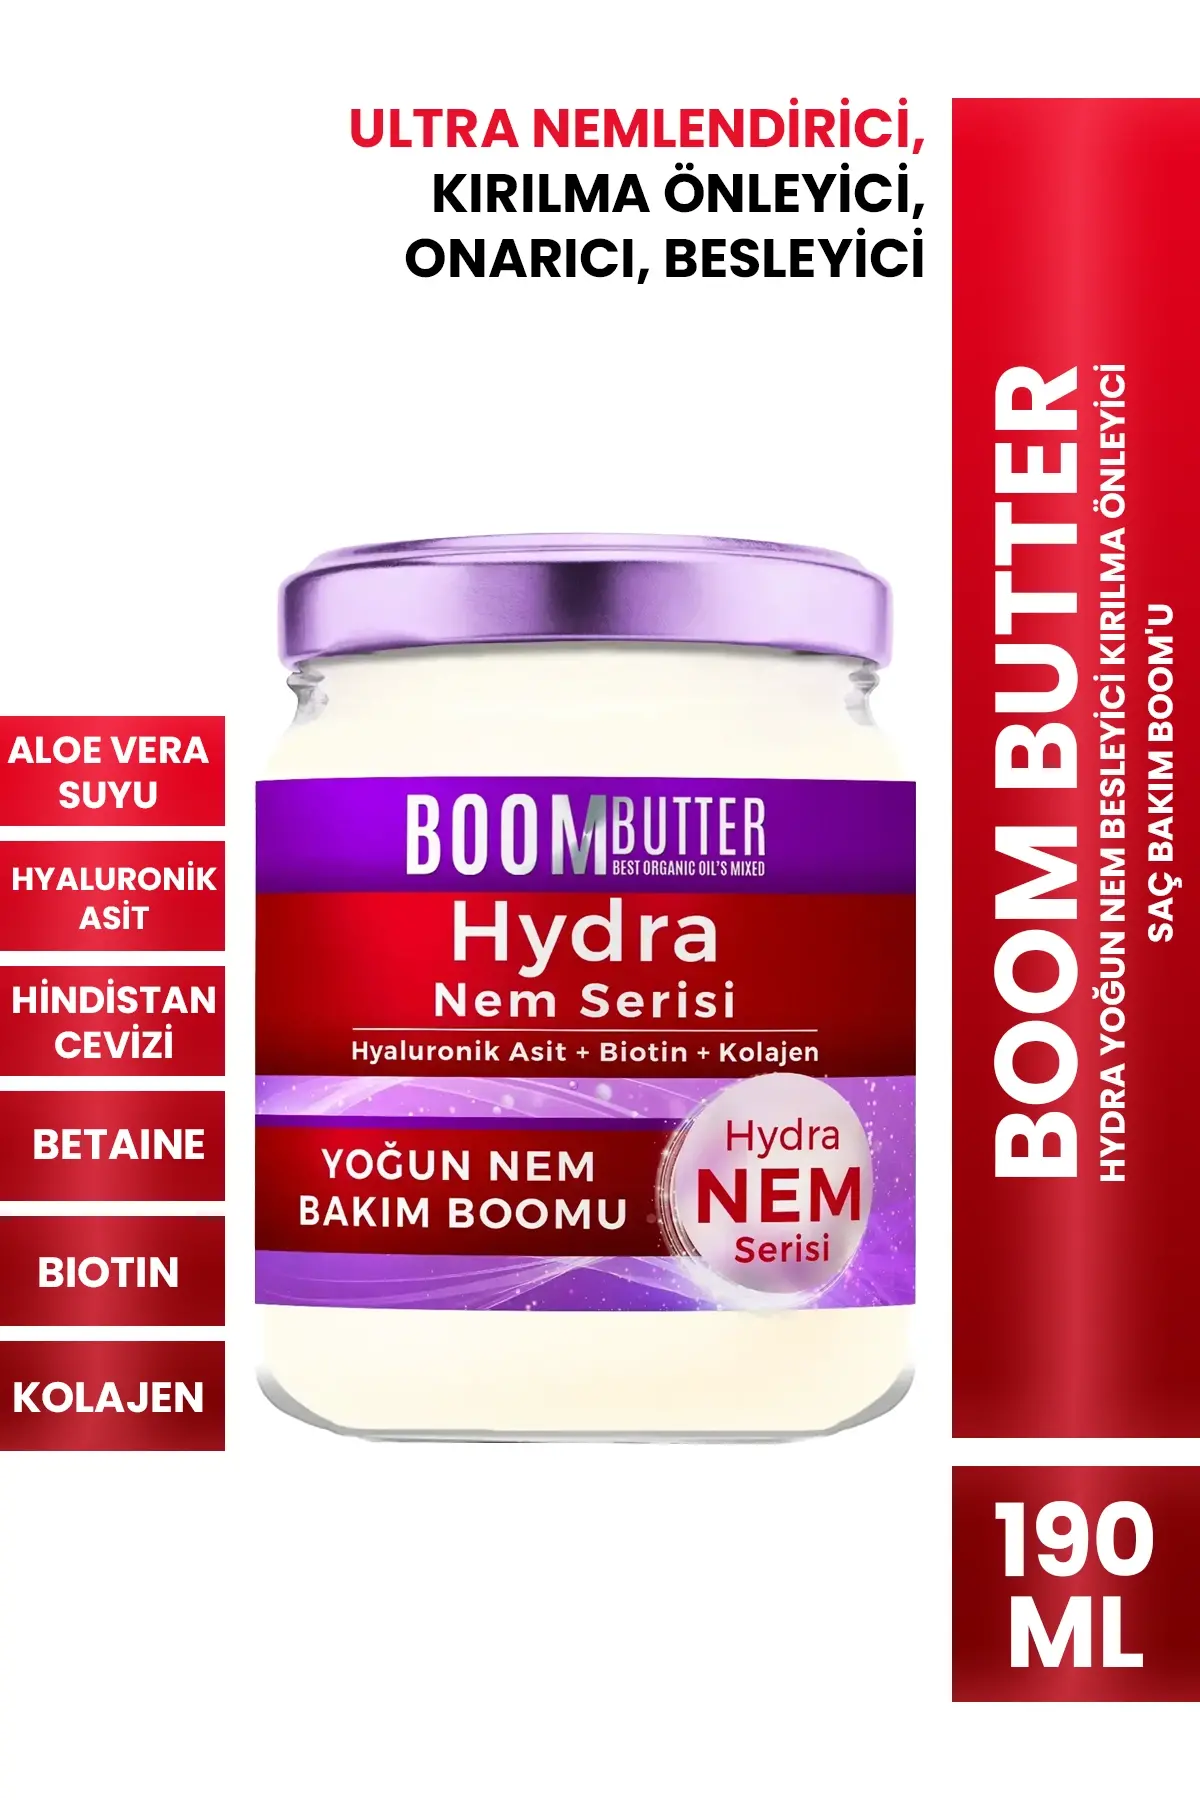 BOOM BUTTER Hydra Intense Moisture Hair Care Boom 190 ML - 1